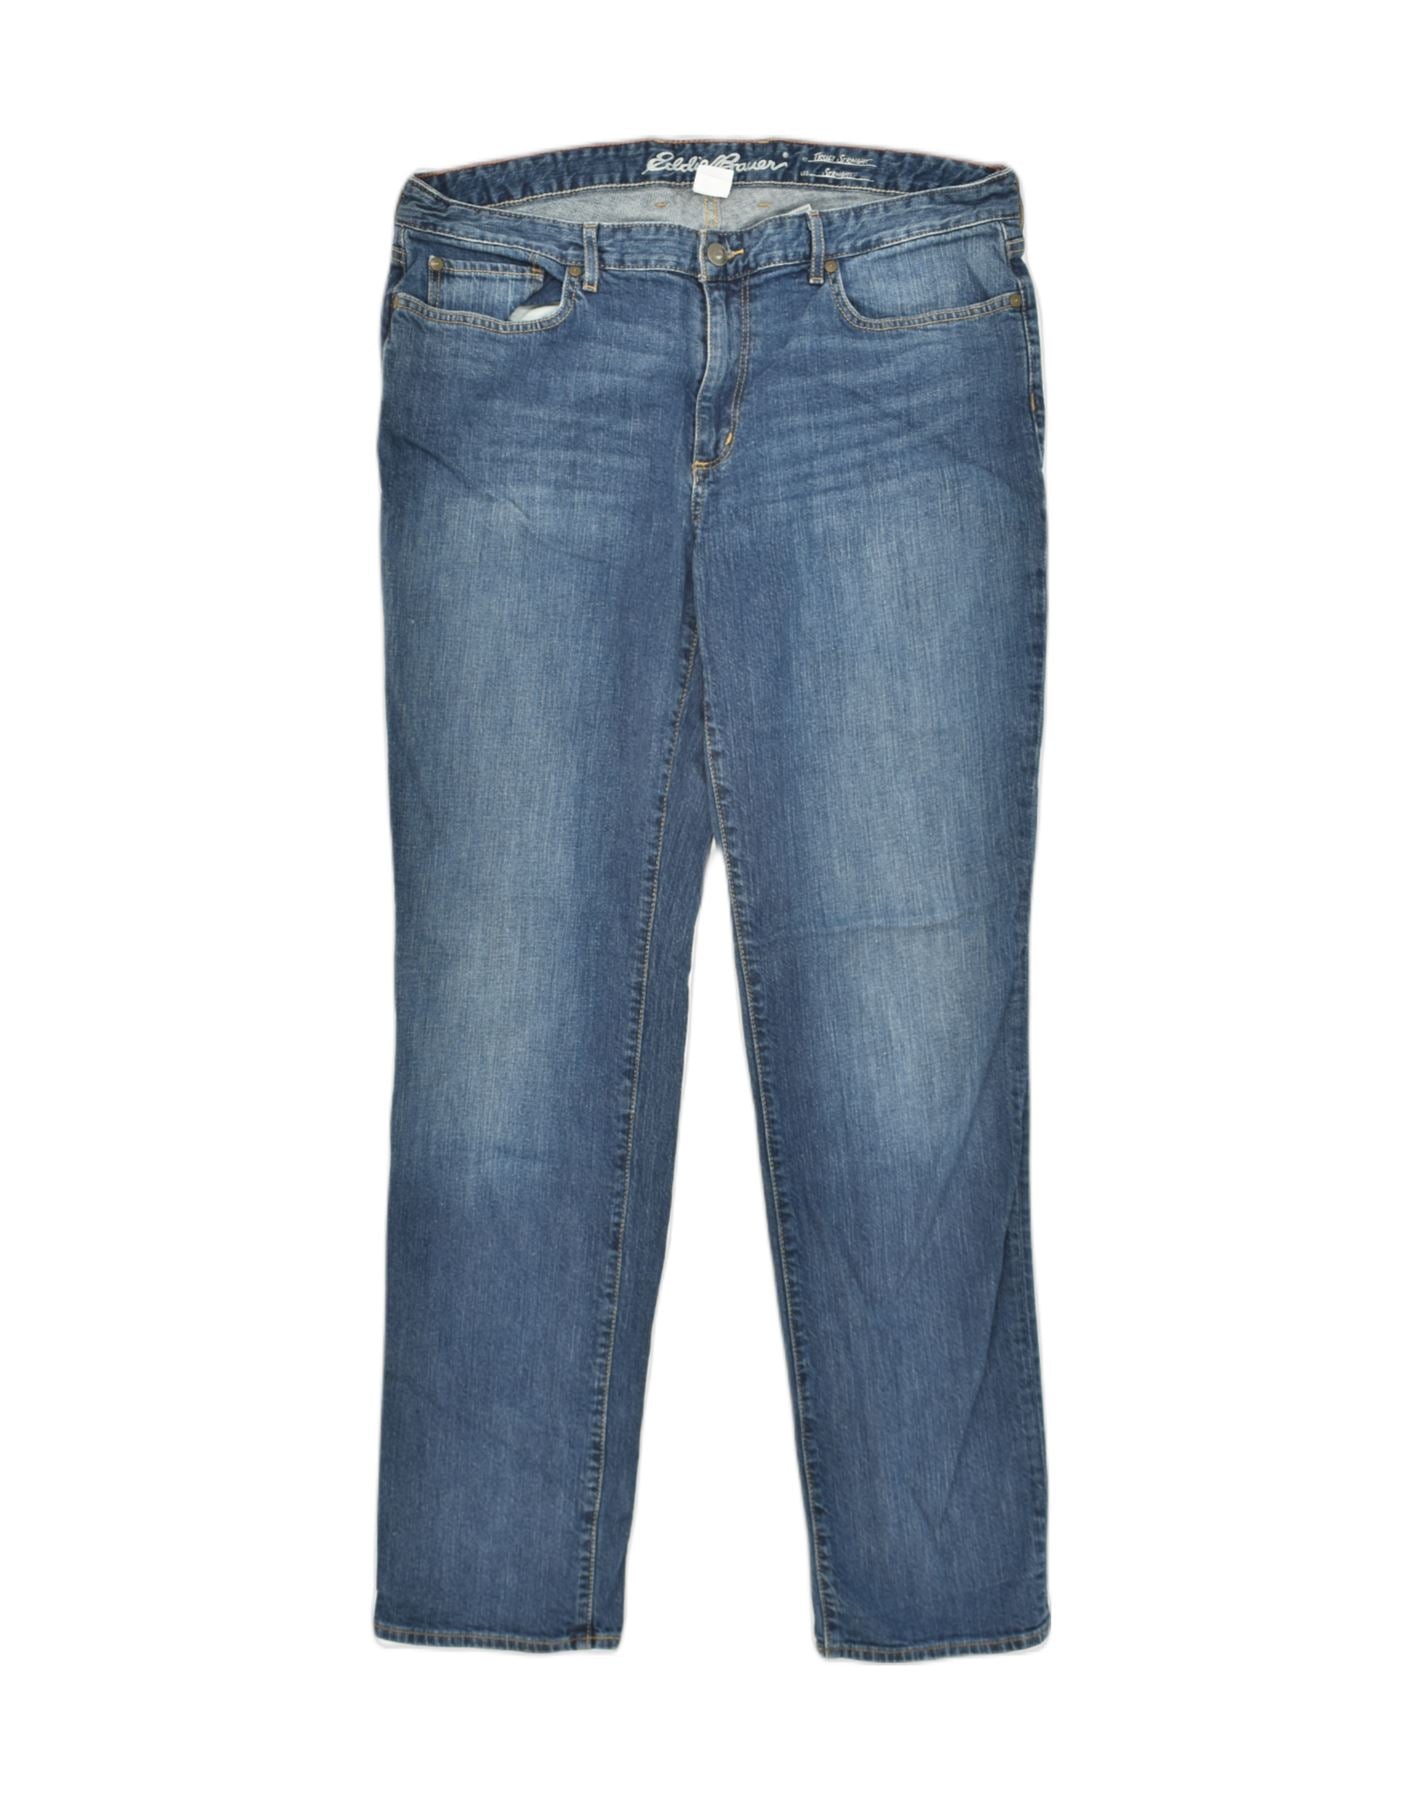 EDDIE BAUER Womens Straight Jeans US 16 2XL W36 L32 Blue Cotton, Vintage &  Second-Hand Clothing Online